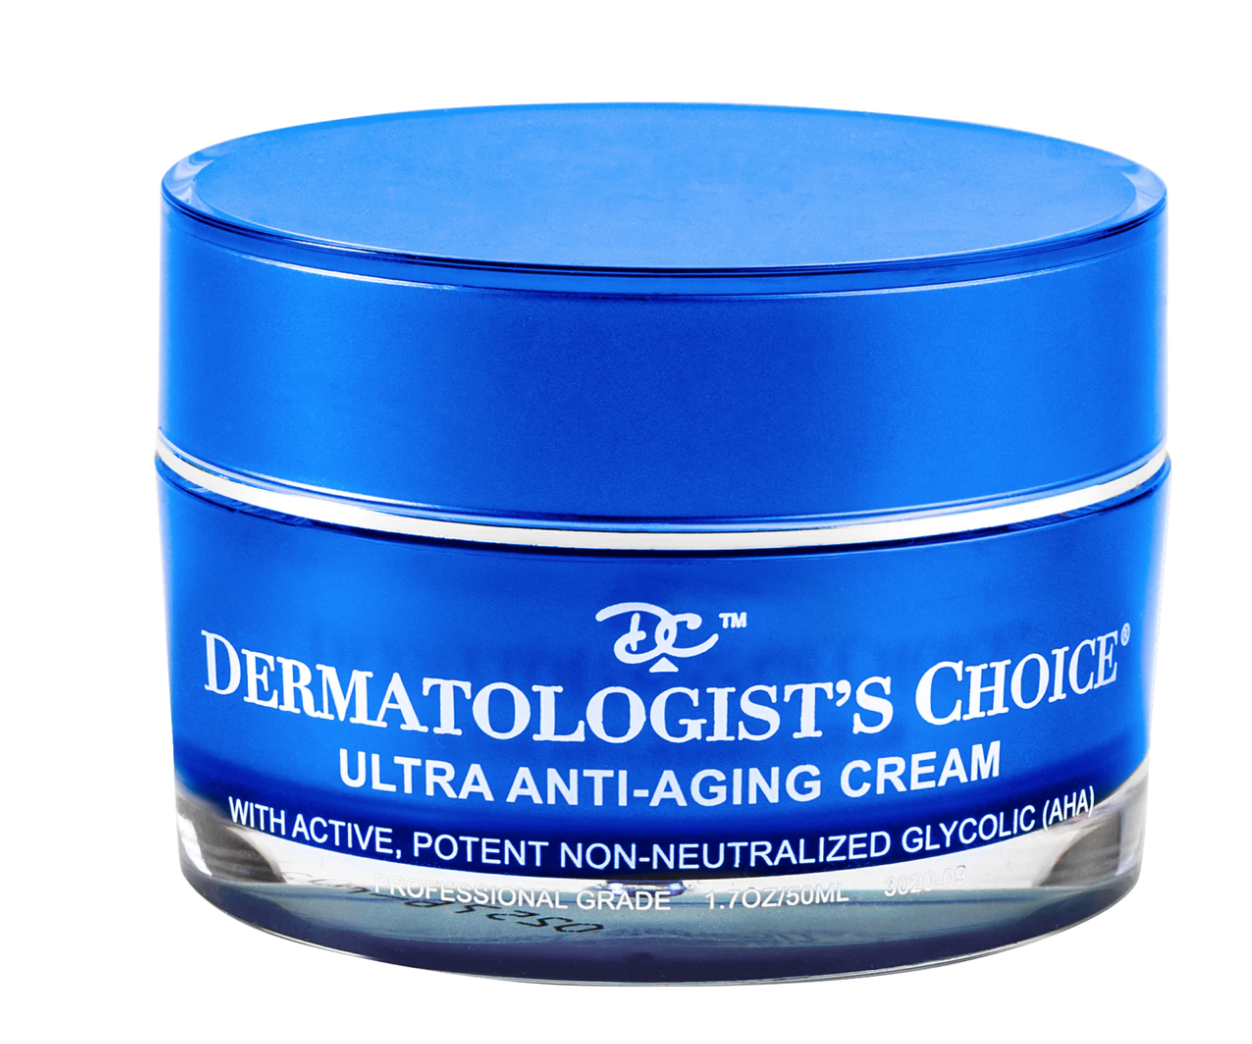 Dermatologist's Choice Ultra Anti-Aging Cream, krachtig glycolzuur